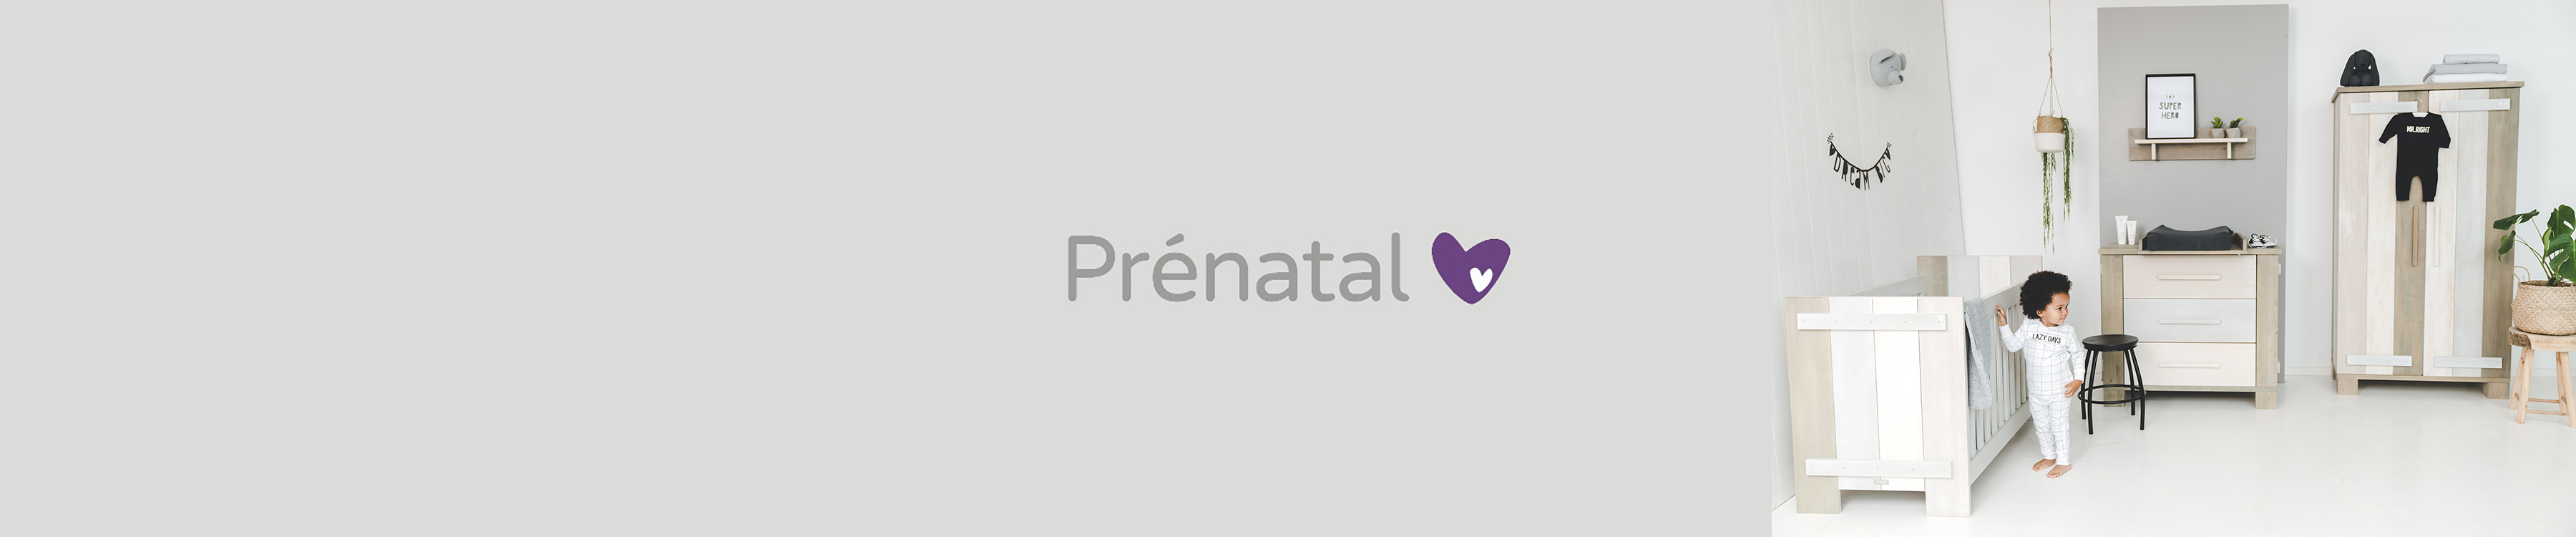 prénatal babykamer